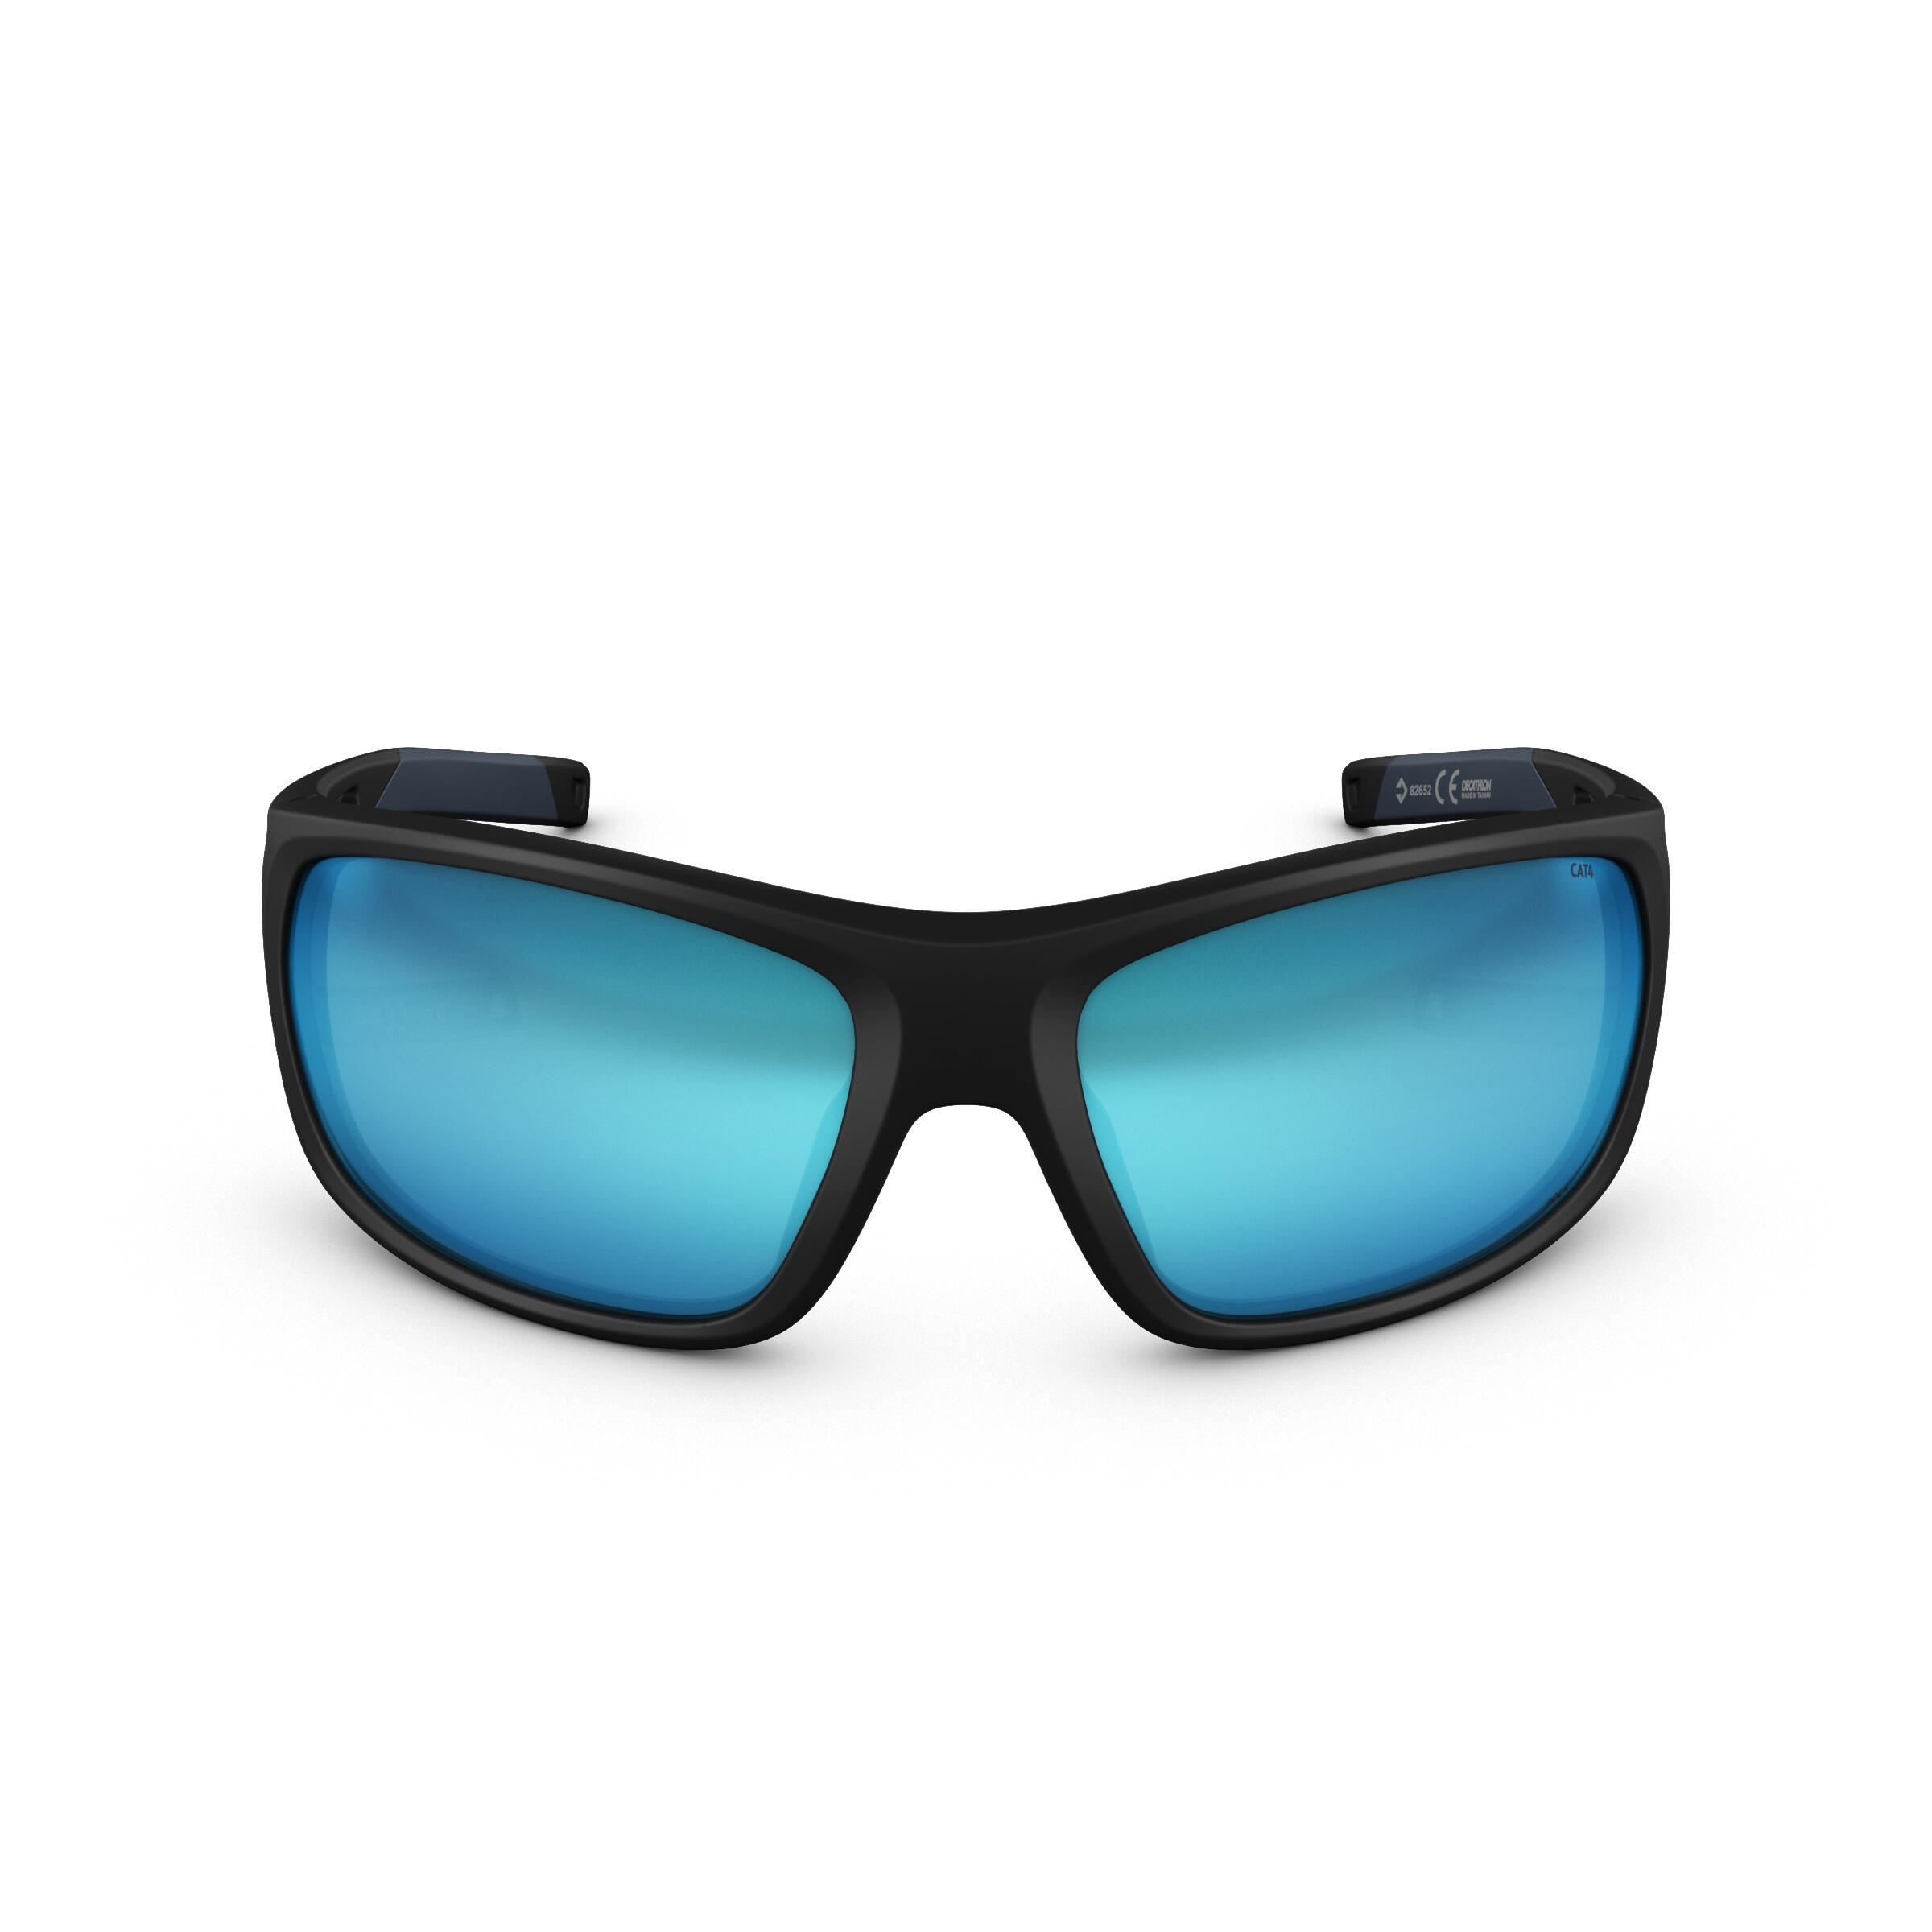 The Best Budget Polarized Sunglasses